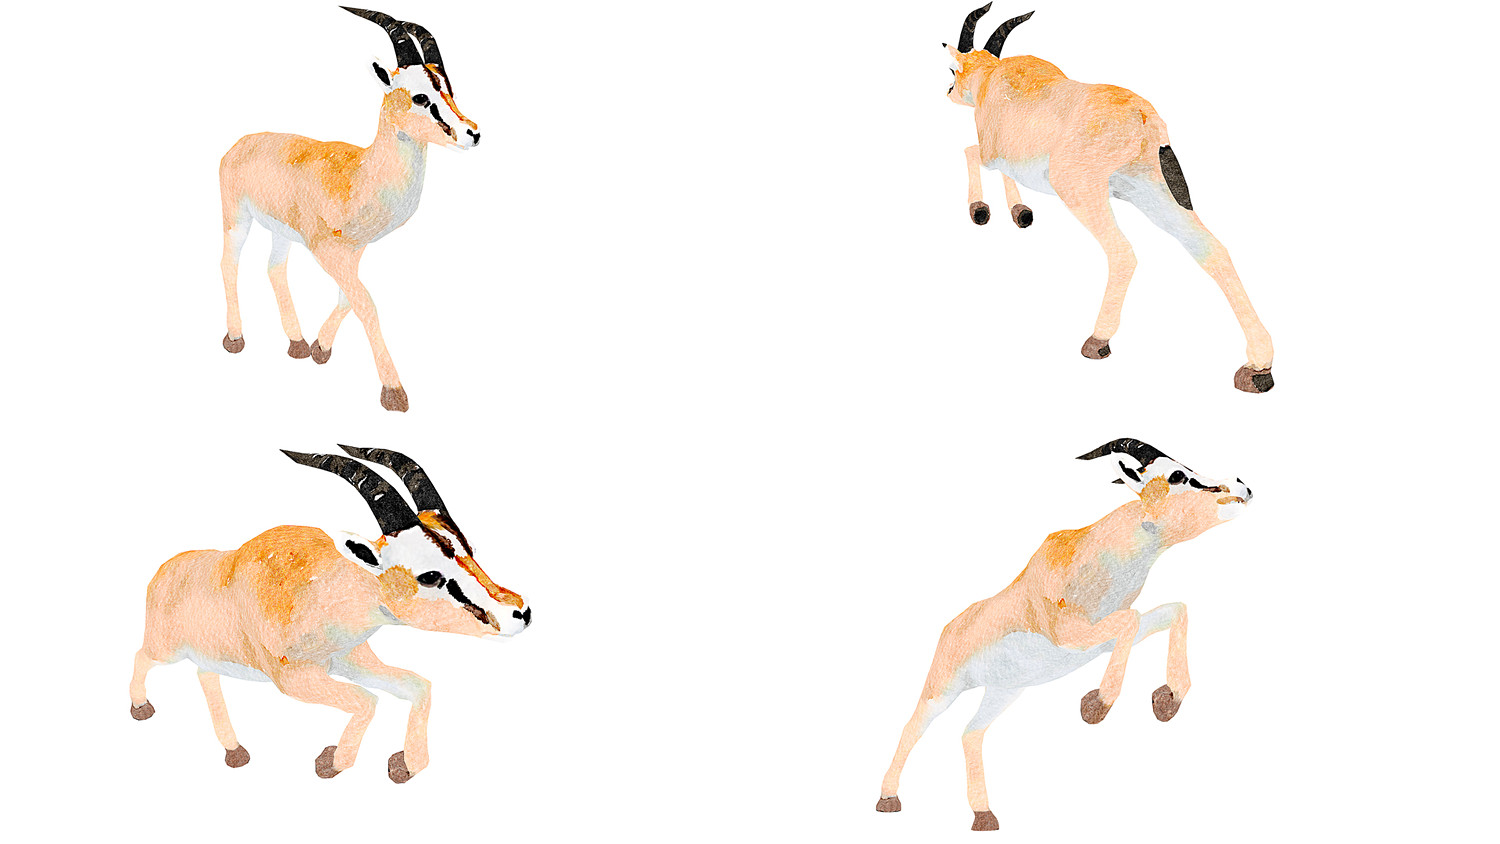 Africa Animal Illustration Animated Part 2